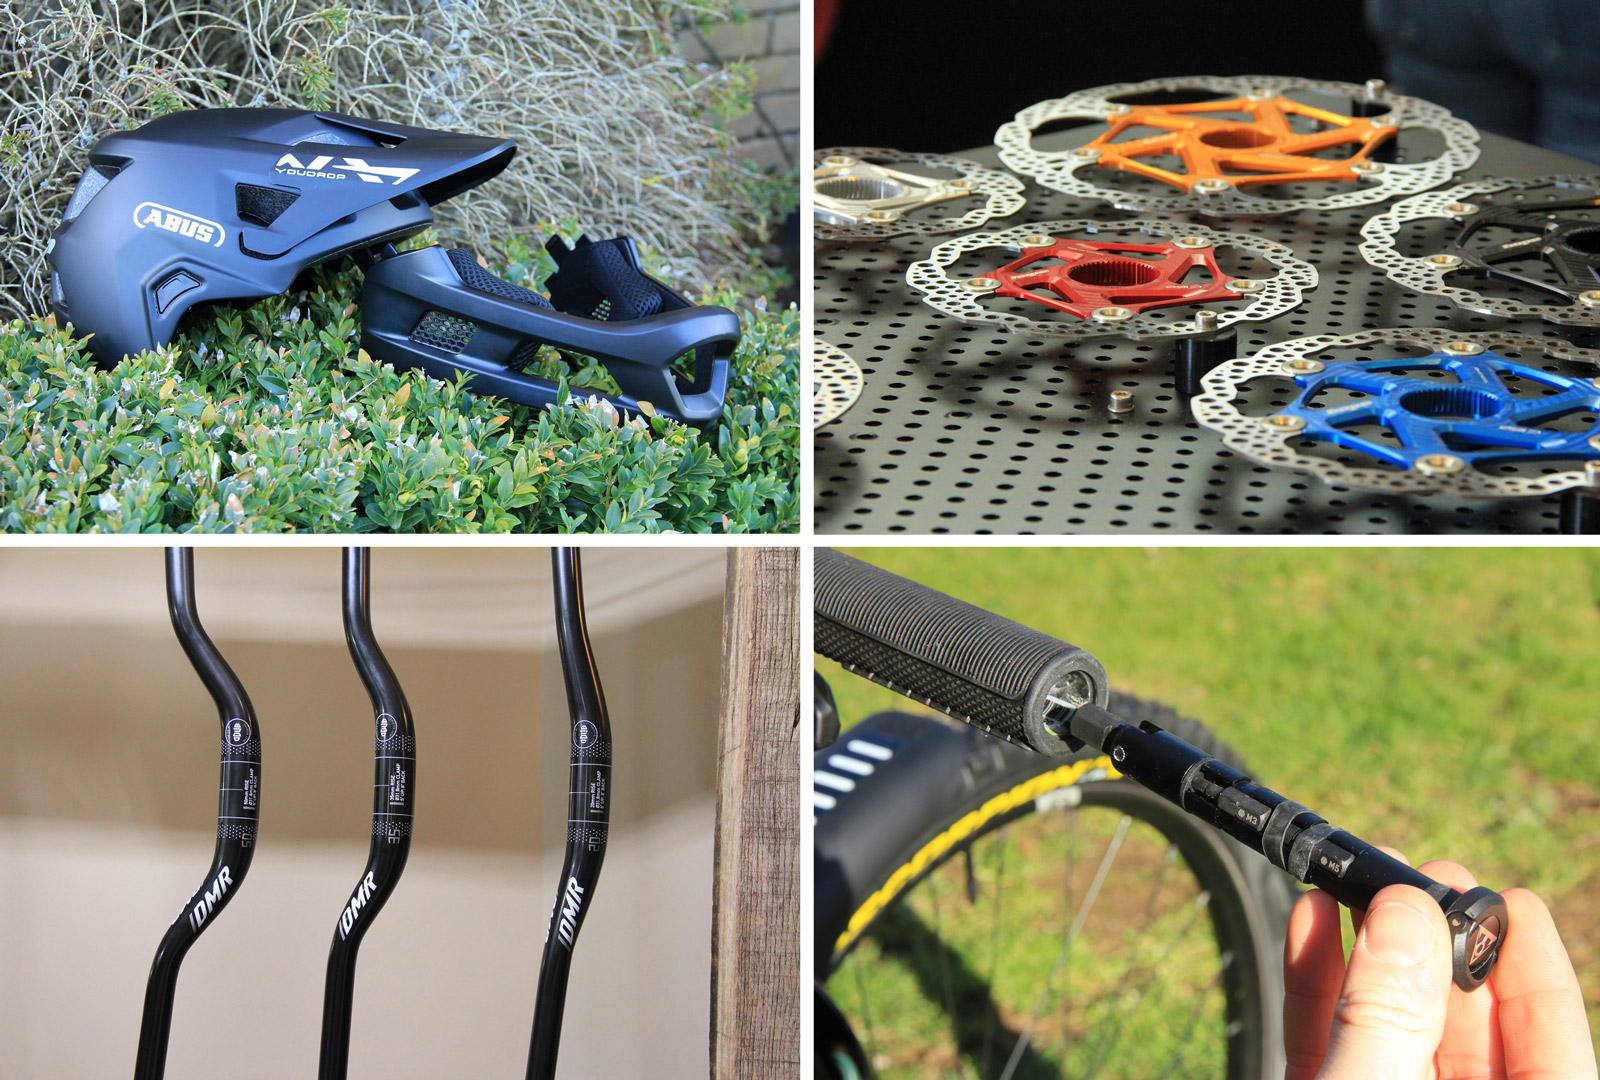 https://bikerumor.com/wp-content/uploads/2023/02/core-bike-2023-best-new-mtb-components-gear-protection-tools-kit.jpg